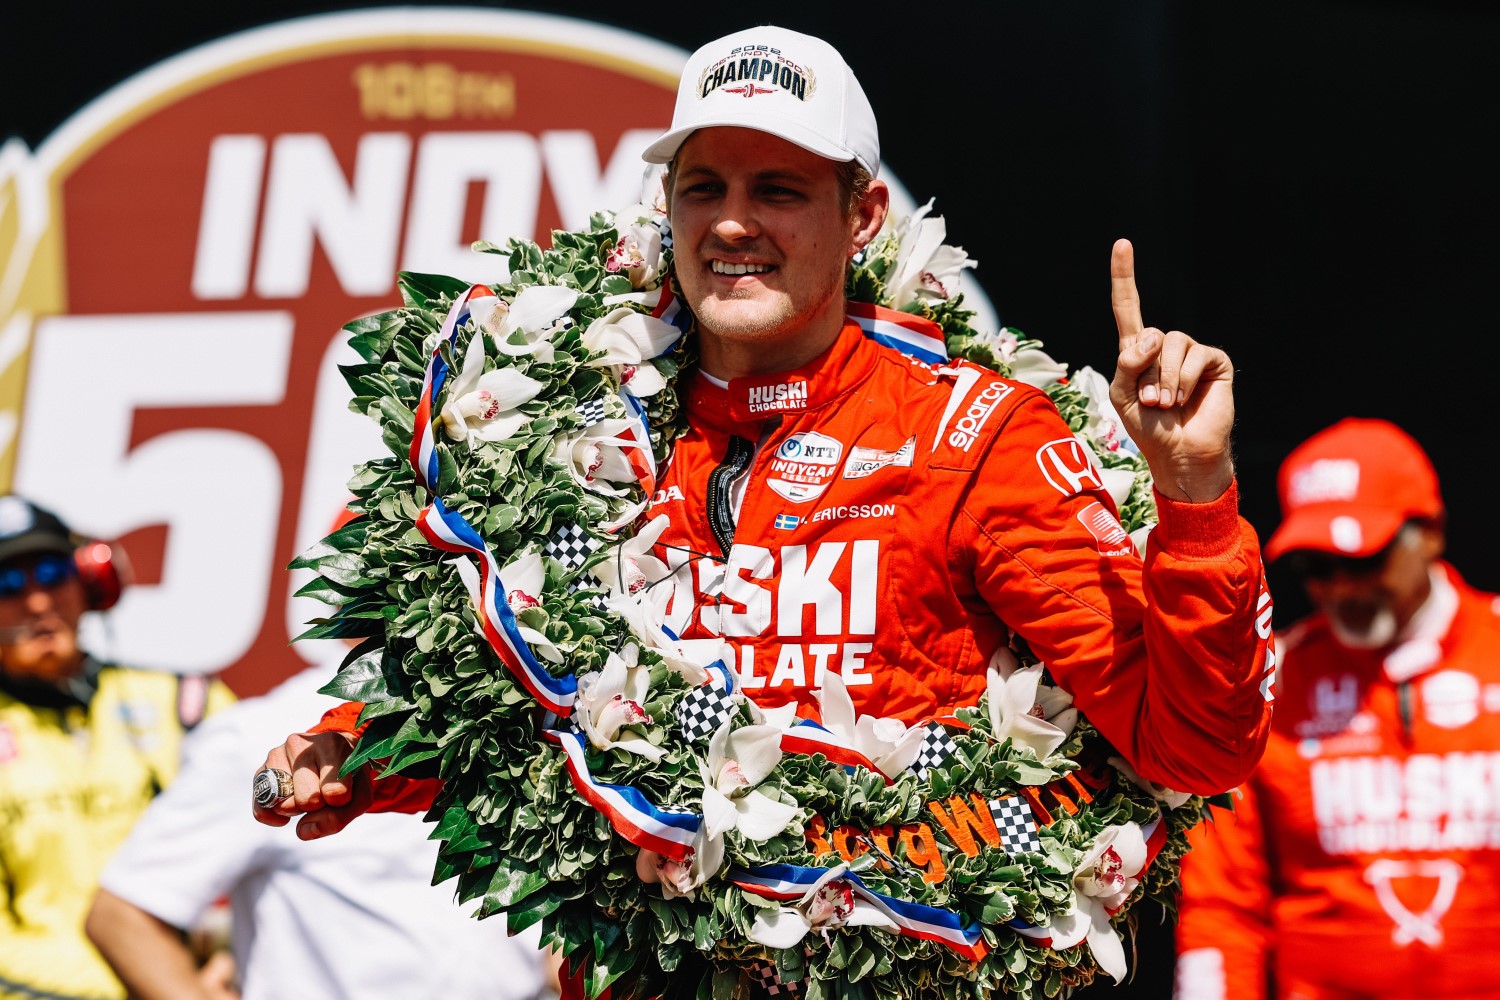 2022 Indy 500 Race winner Marcus Ericsson. Photo by Joe Skibinski/IMS